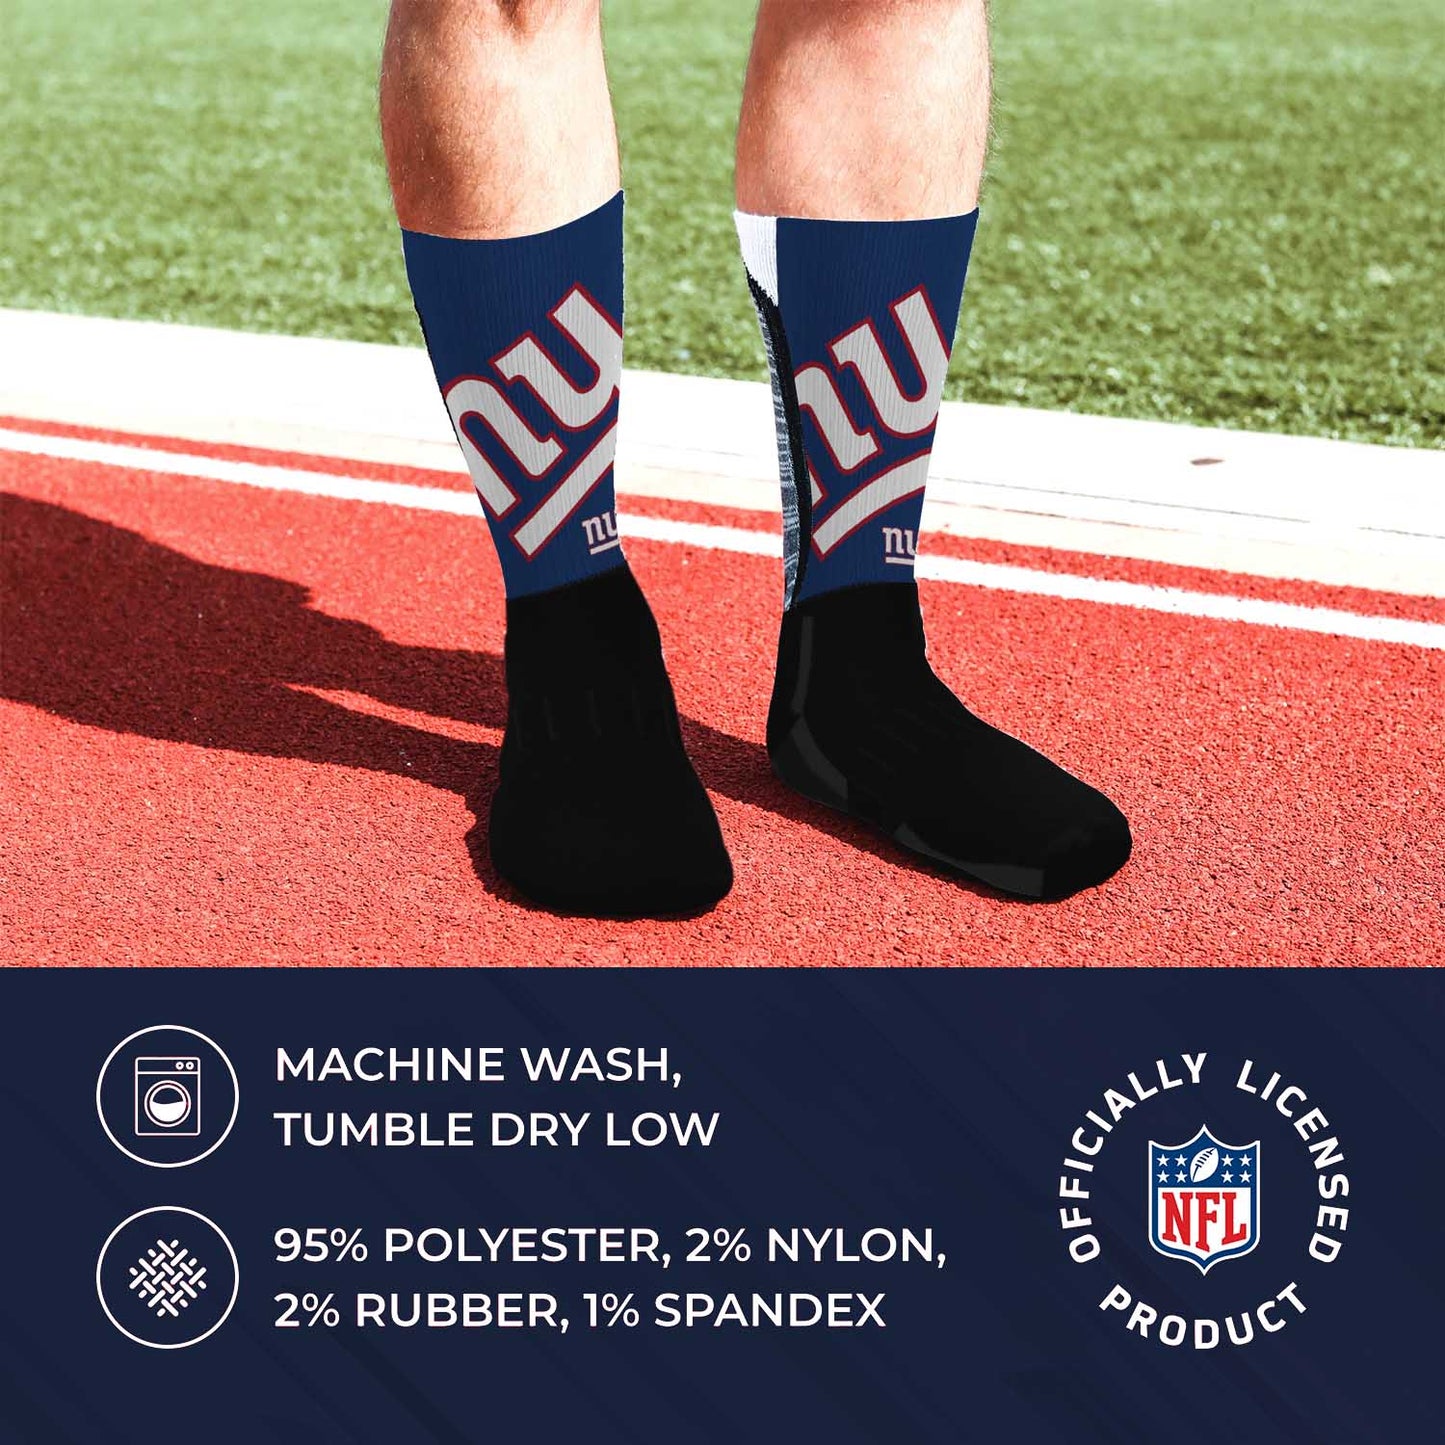 New York Giants NFL Youth V Curve Socks - Black